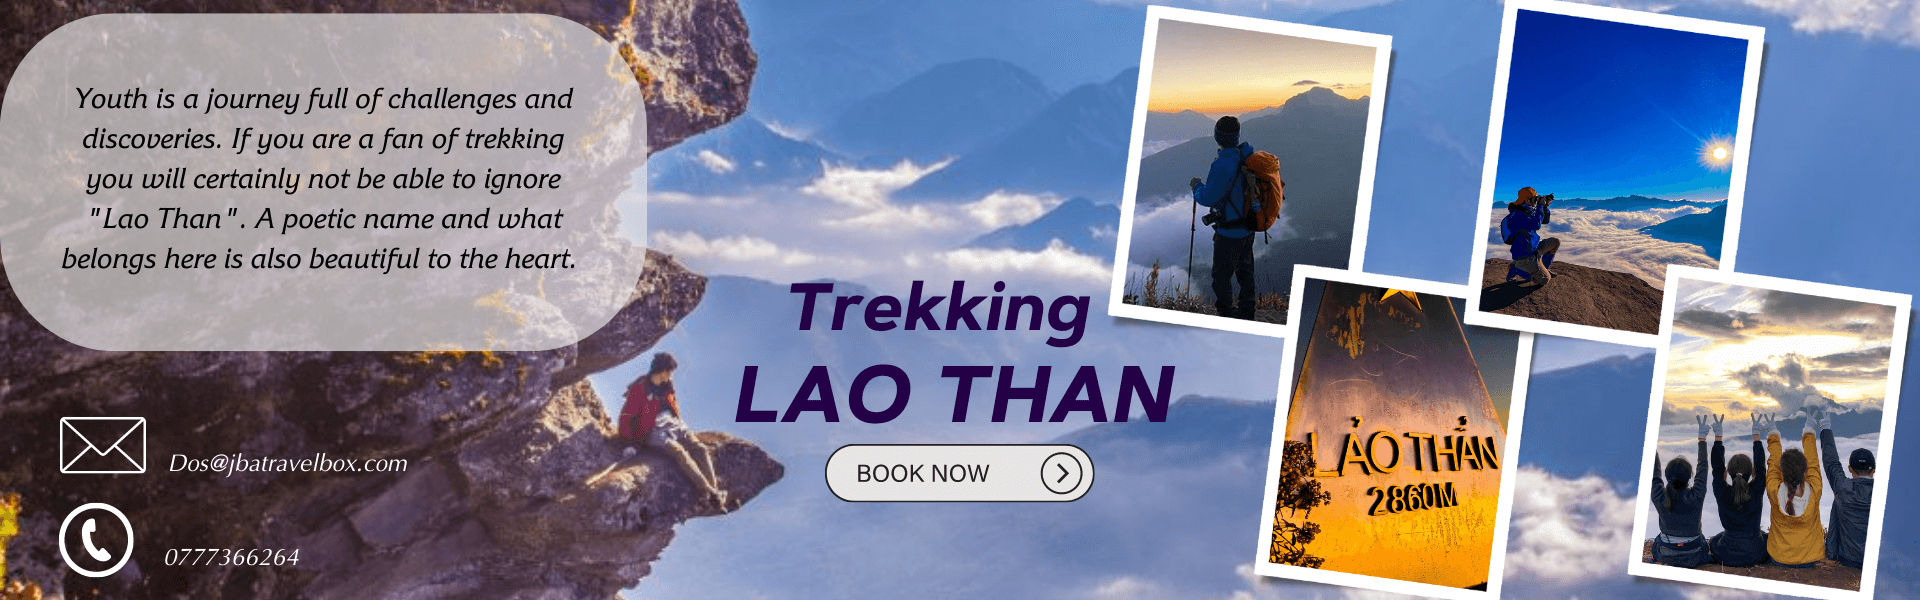 Lao Than Trekking